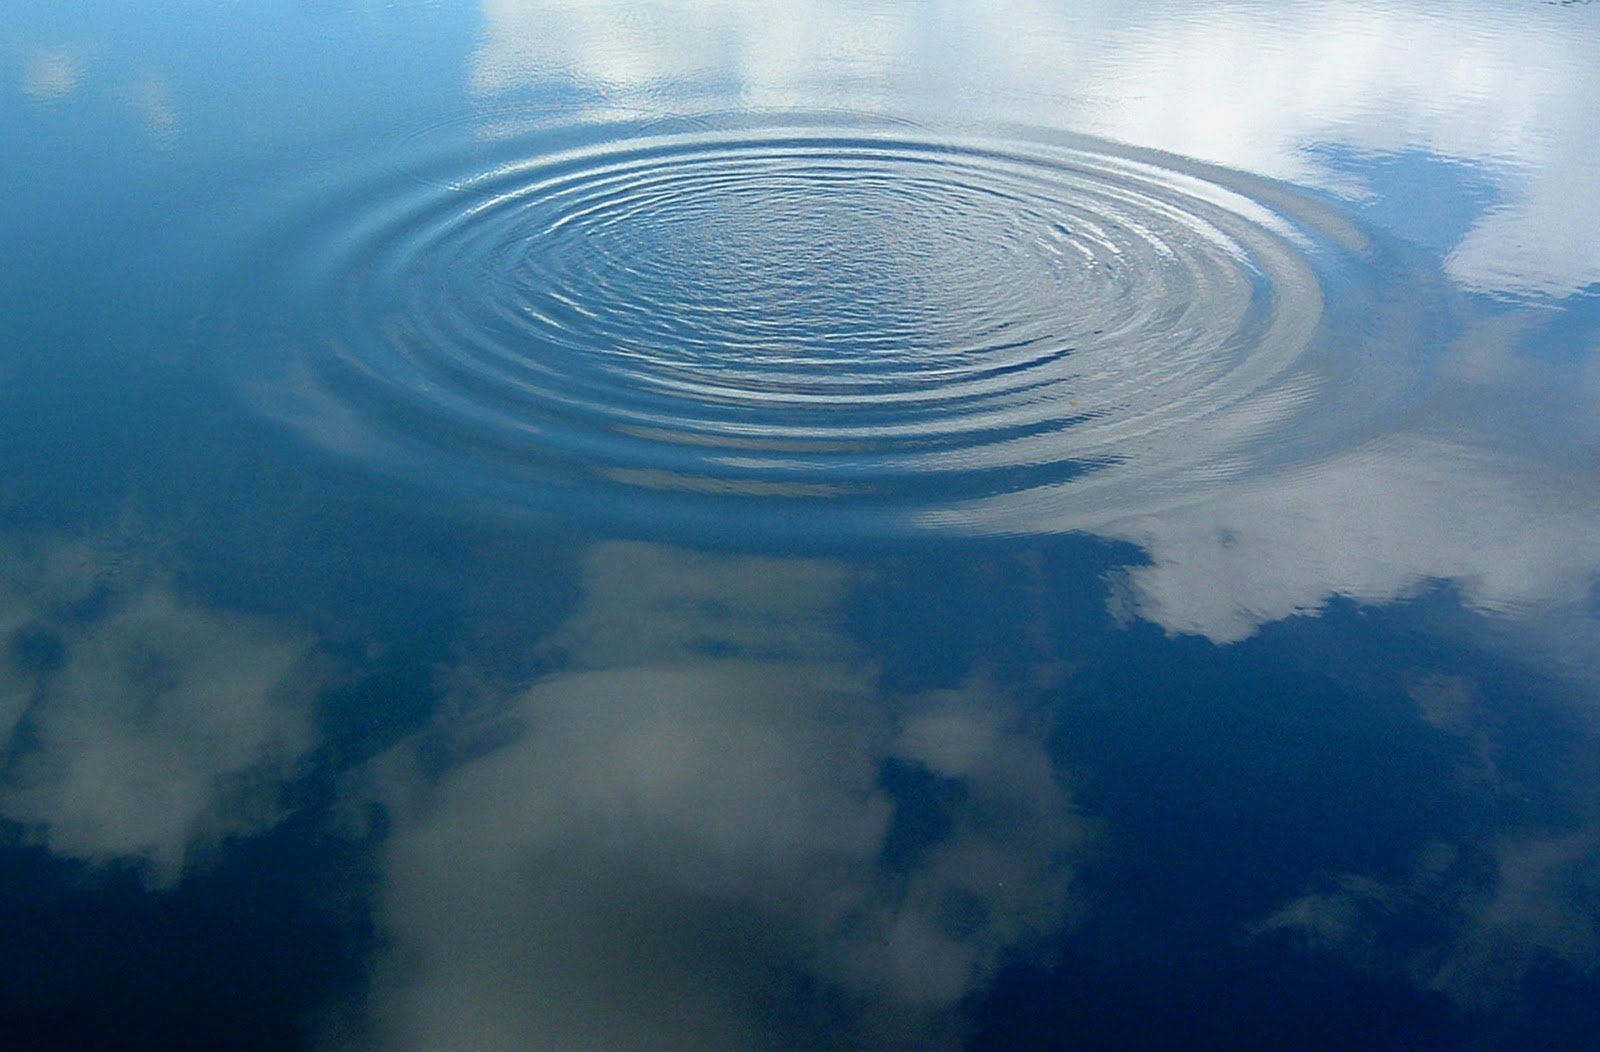 Круги н воде. Круги на воде. КГИ вода. Концентрические круги на воде. Круги на воде вид сверху.